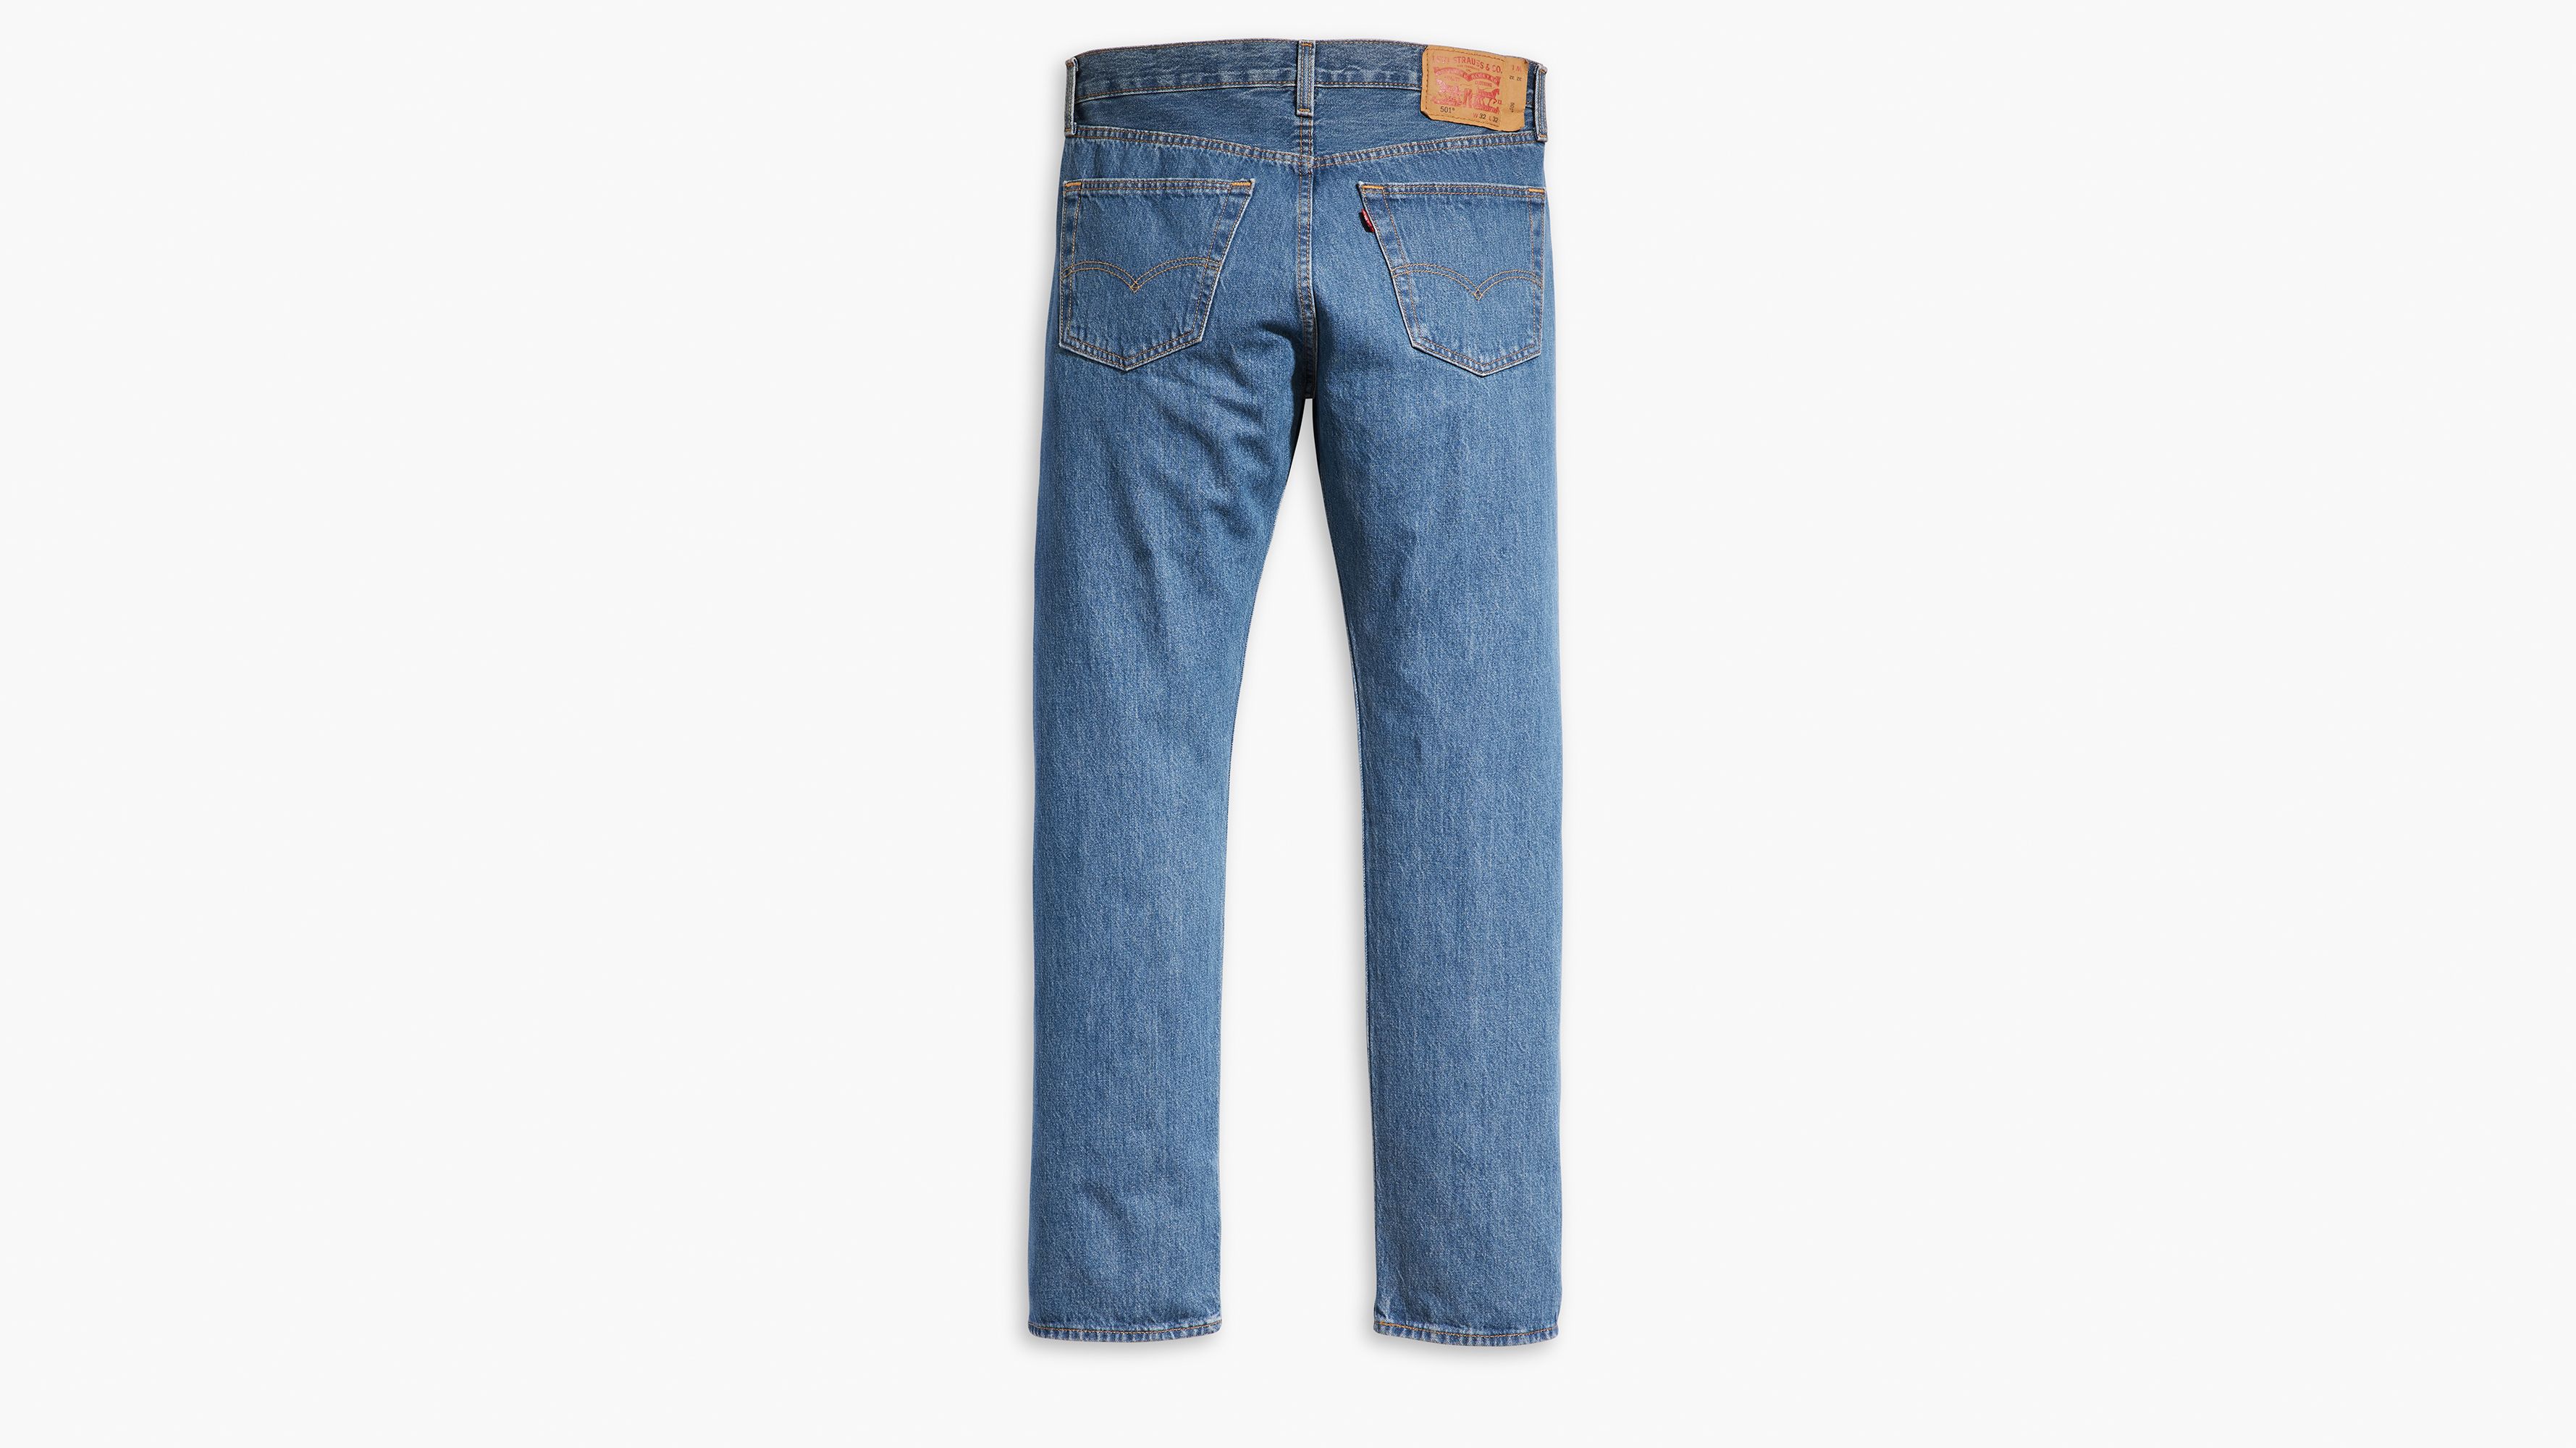 Levi Strauss Mens Original Fit 501 Jeans 28x32 Dark Stonewash 